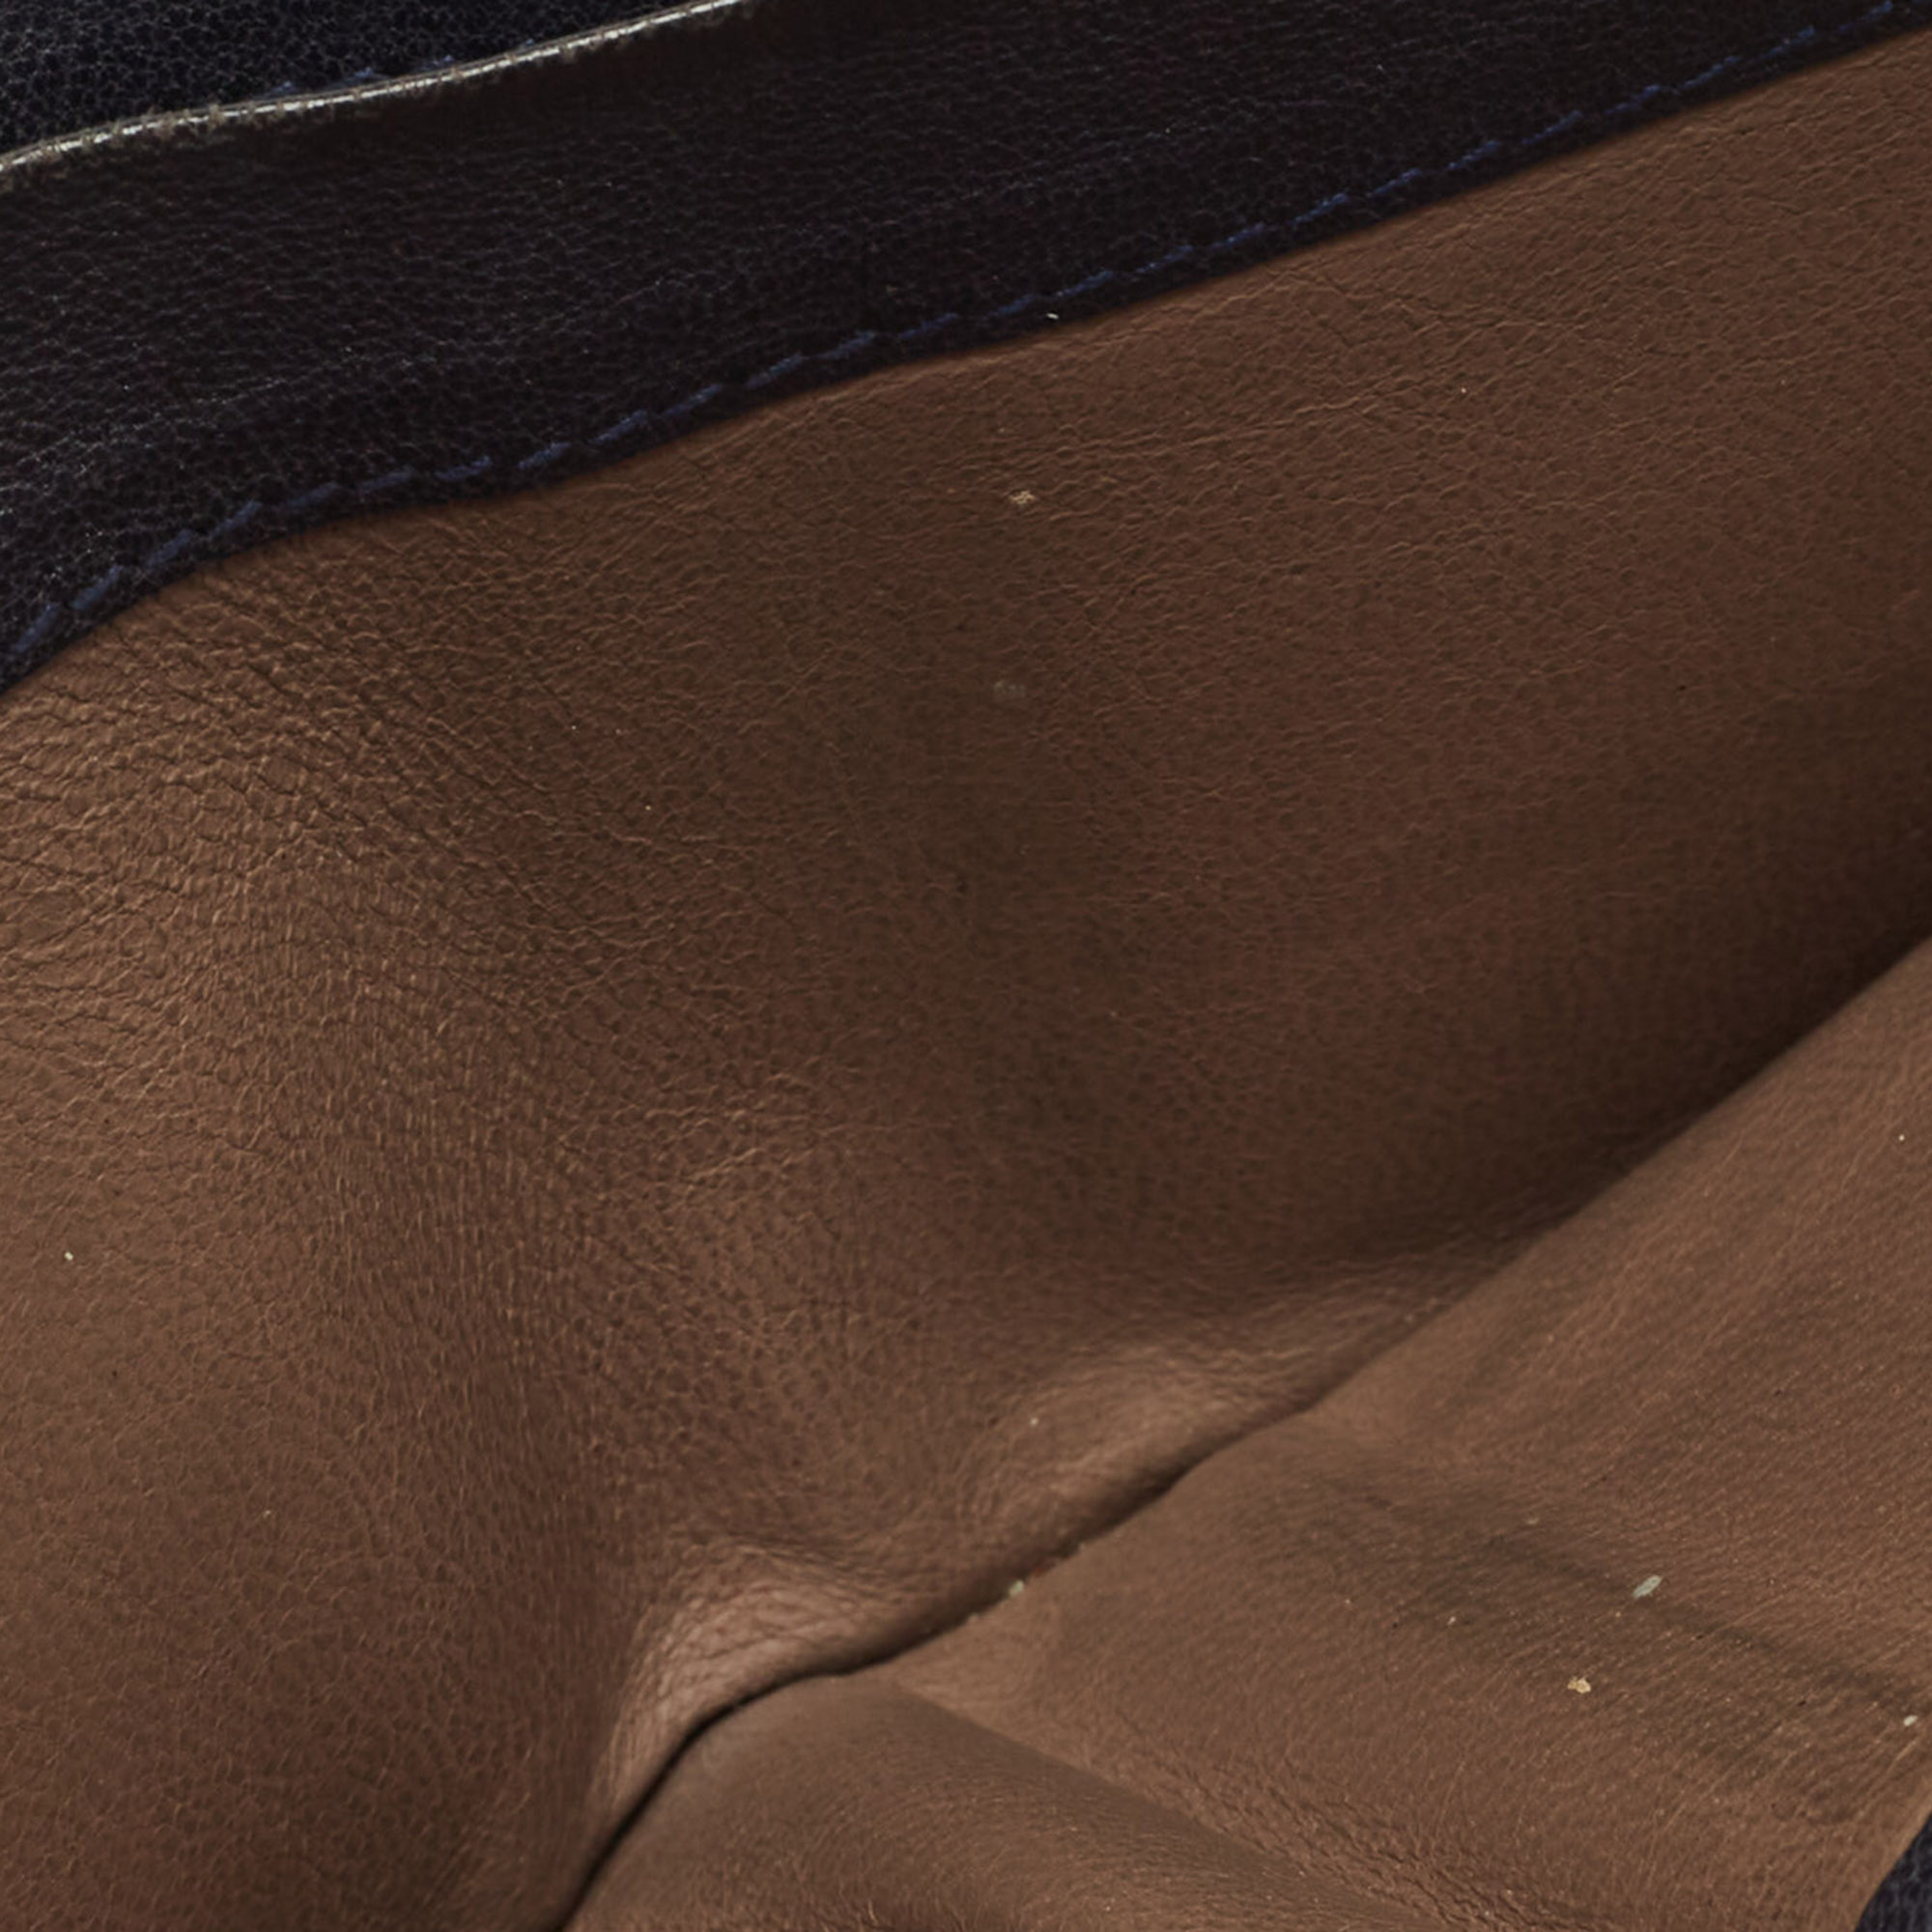 Bottega Veneta Navy Blue Intrecciato Leather Bifold Wallet